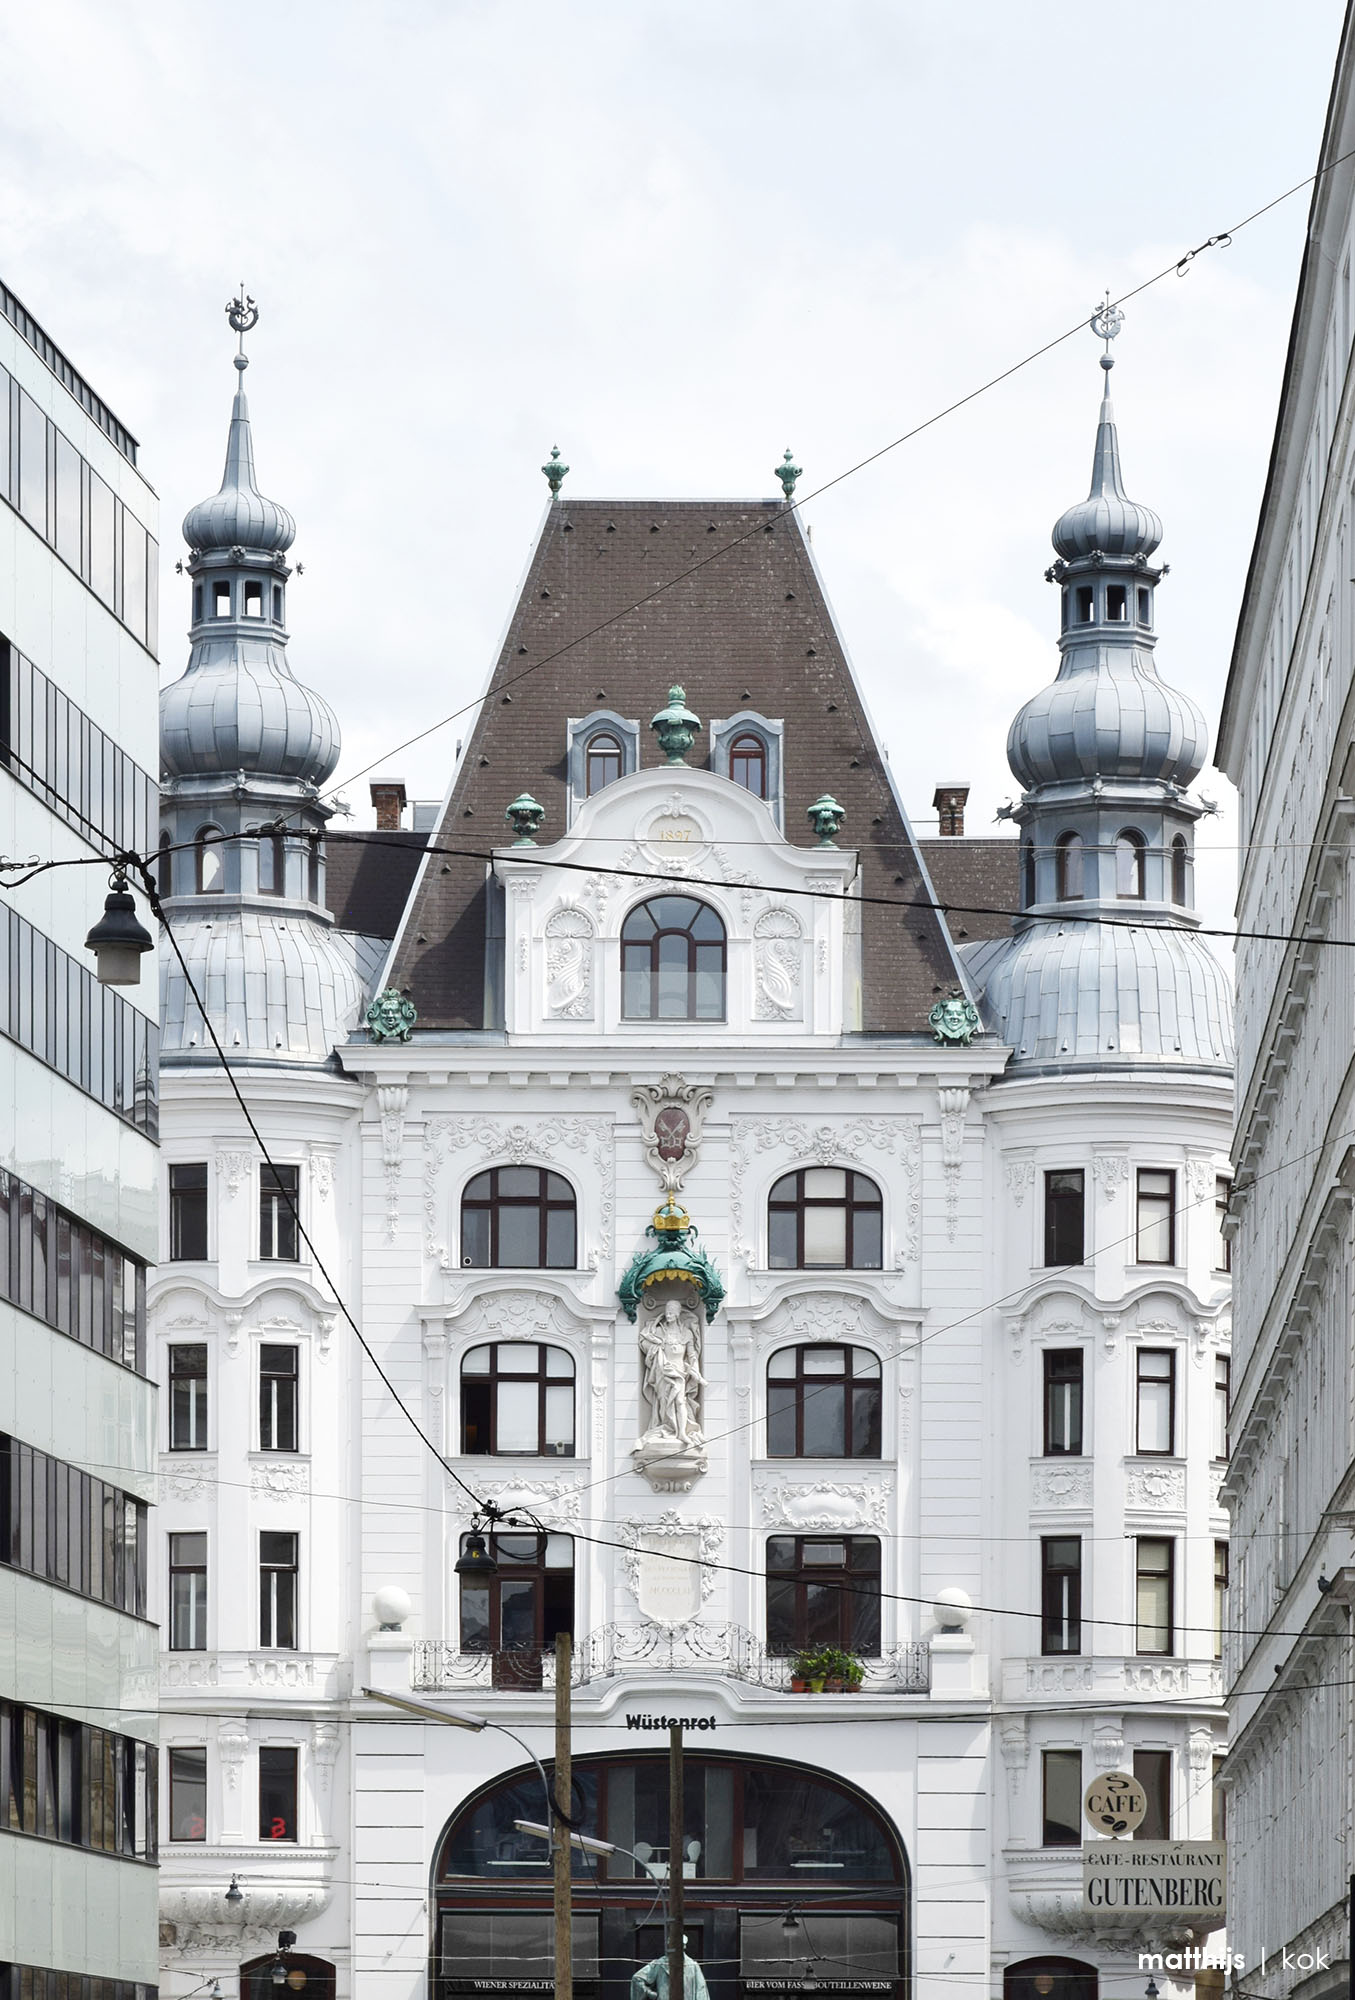 Regensburger Hof, Vienna, Austria | Photo by Matthijs Kok